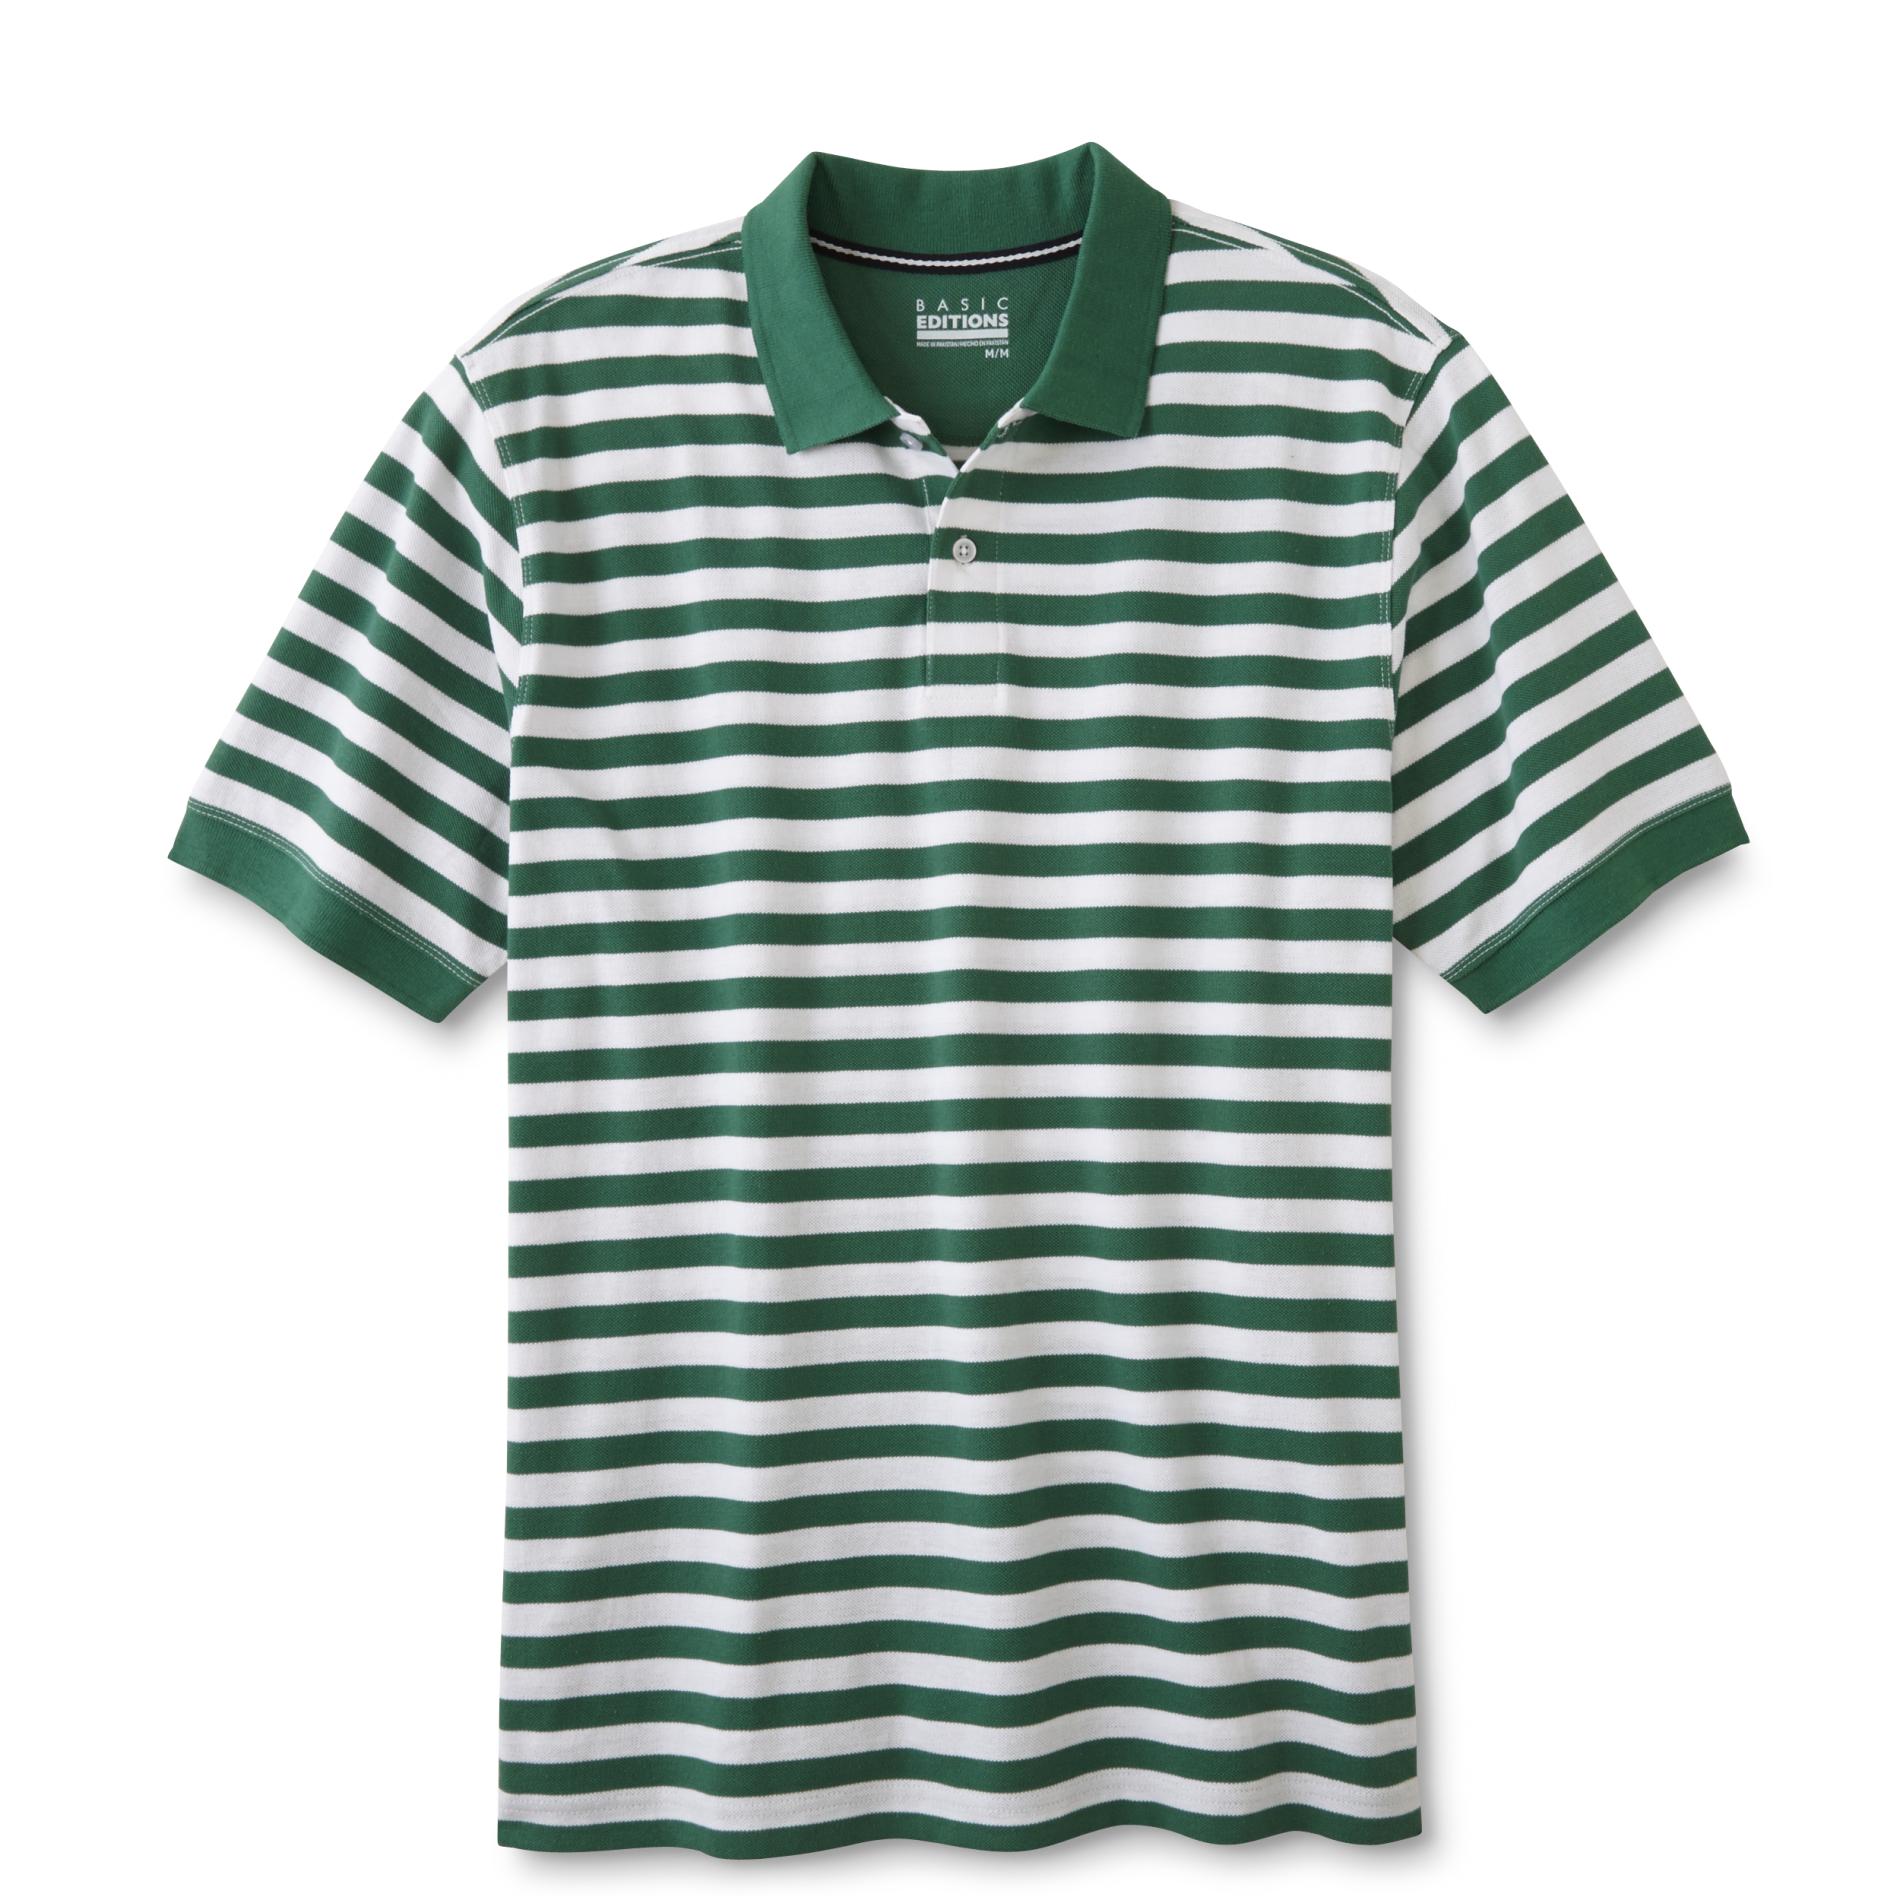 Basic Editions Men's Big & Tall Pique Polo Shirt - Striped